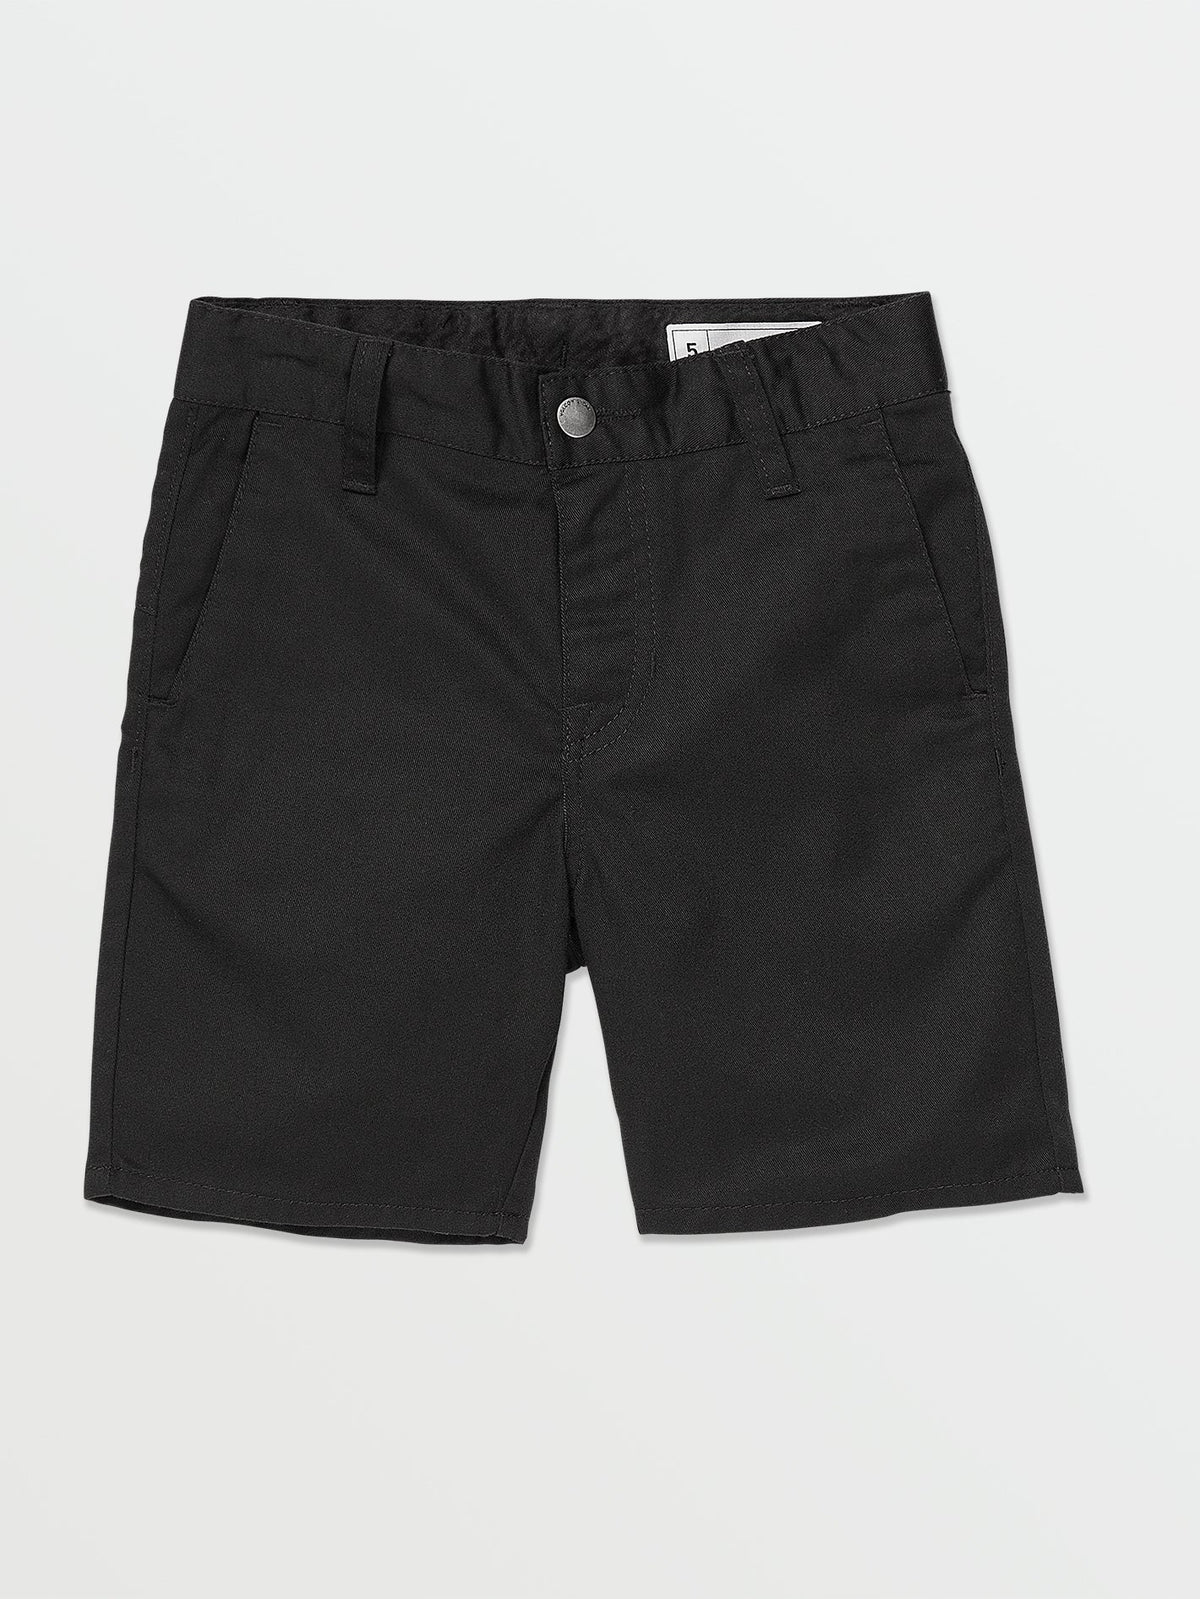 Volcom Frickin Chino Boys Shorts (Age 2-7) Black